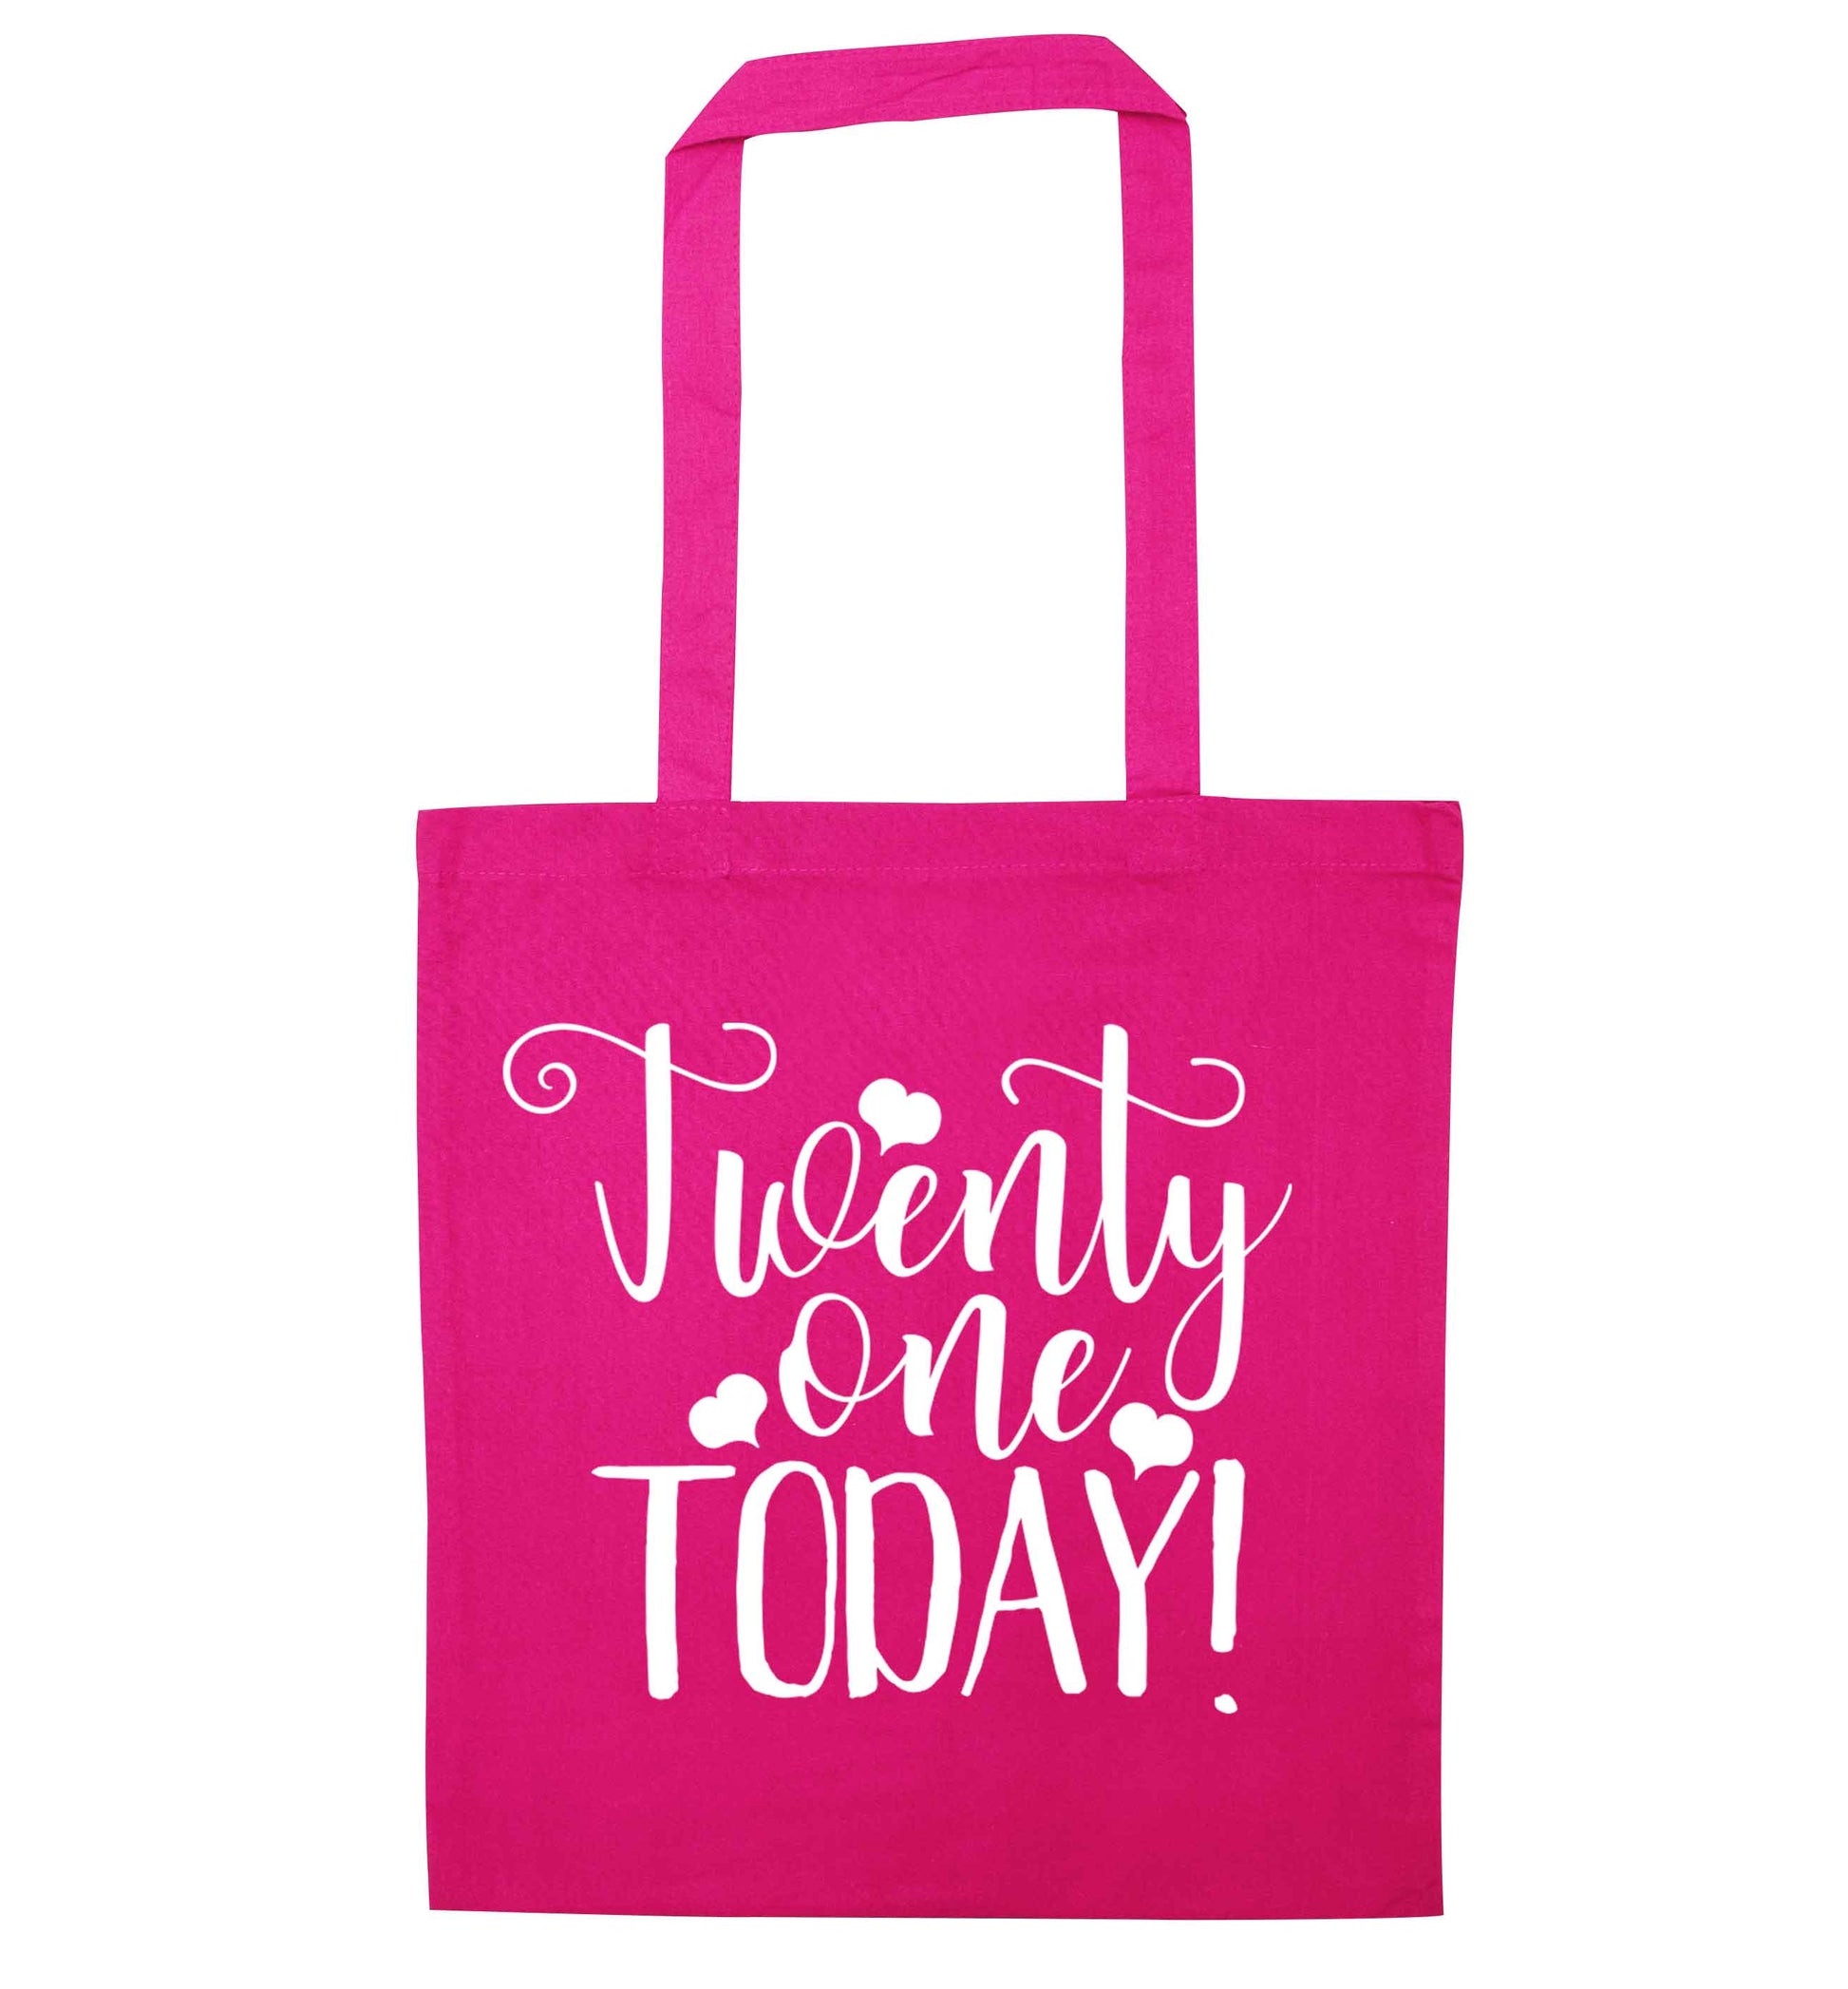 Twenty one today!pink tote bag